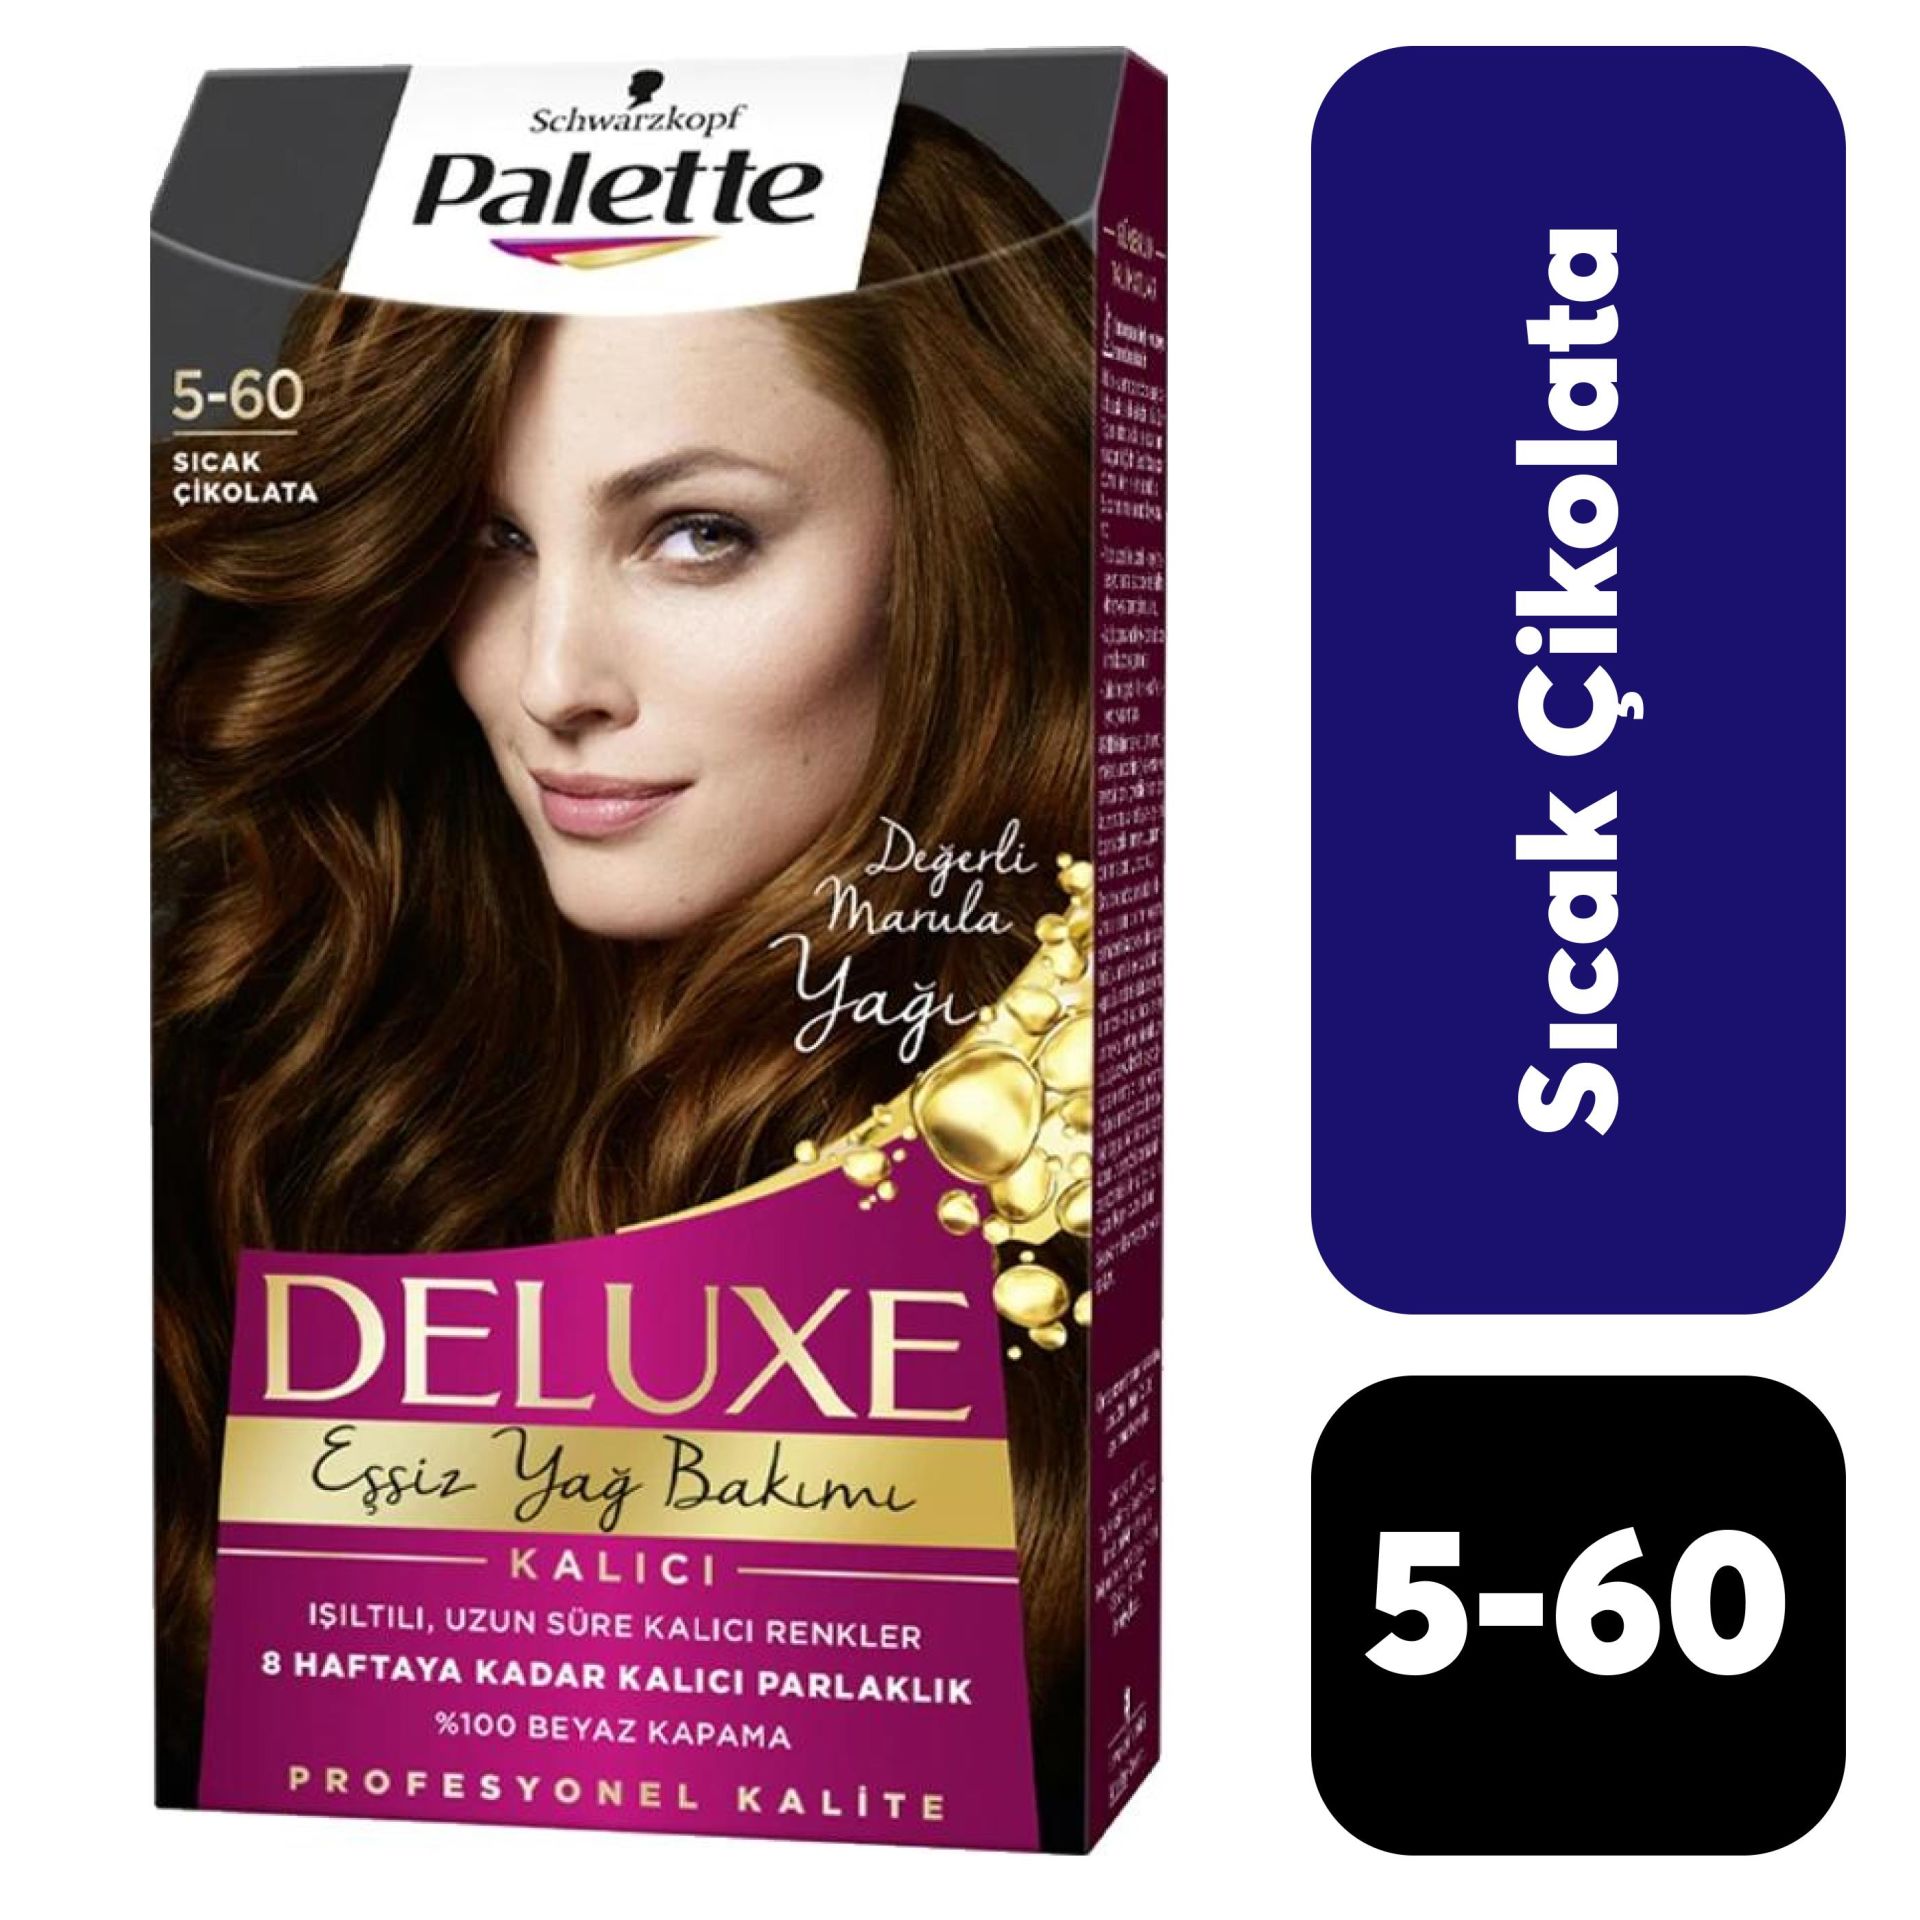 .Set Palette Deluxe .5-60 Sıcak Çikolata